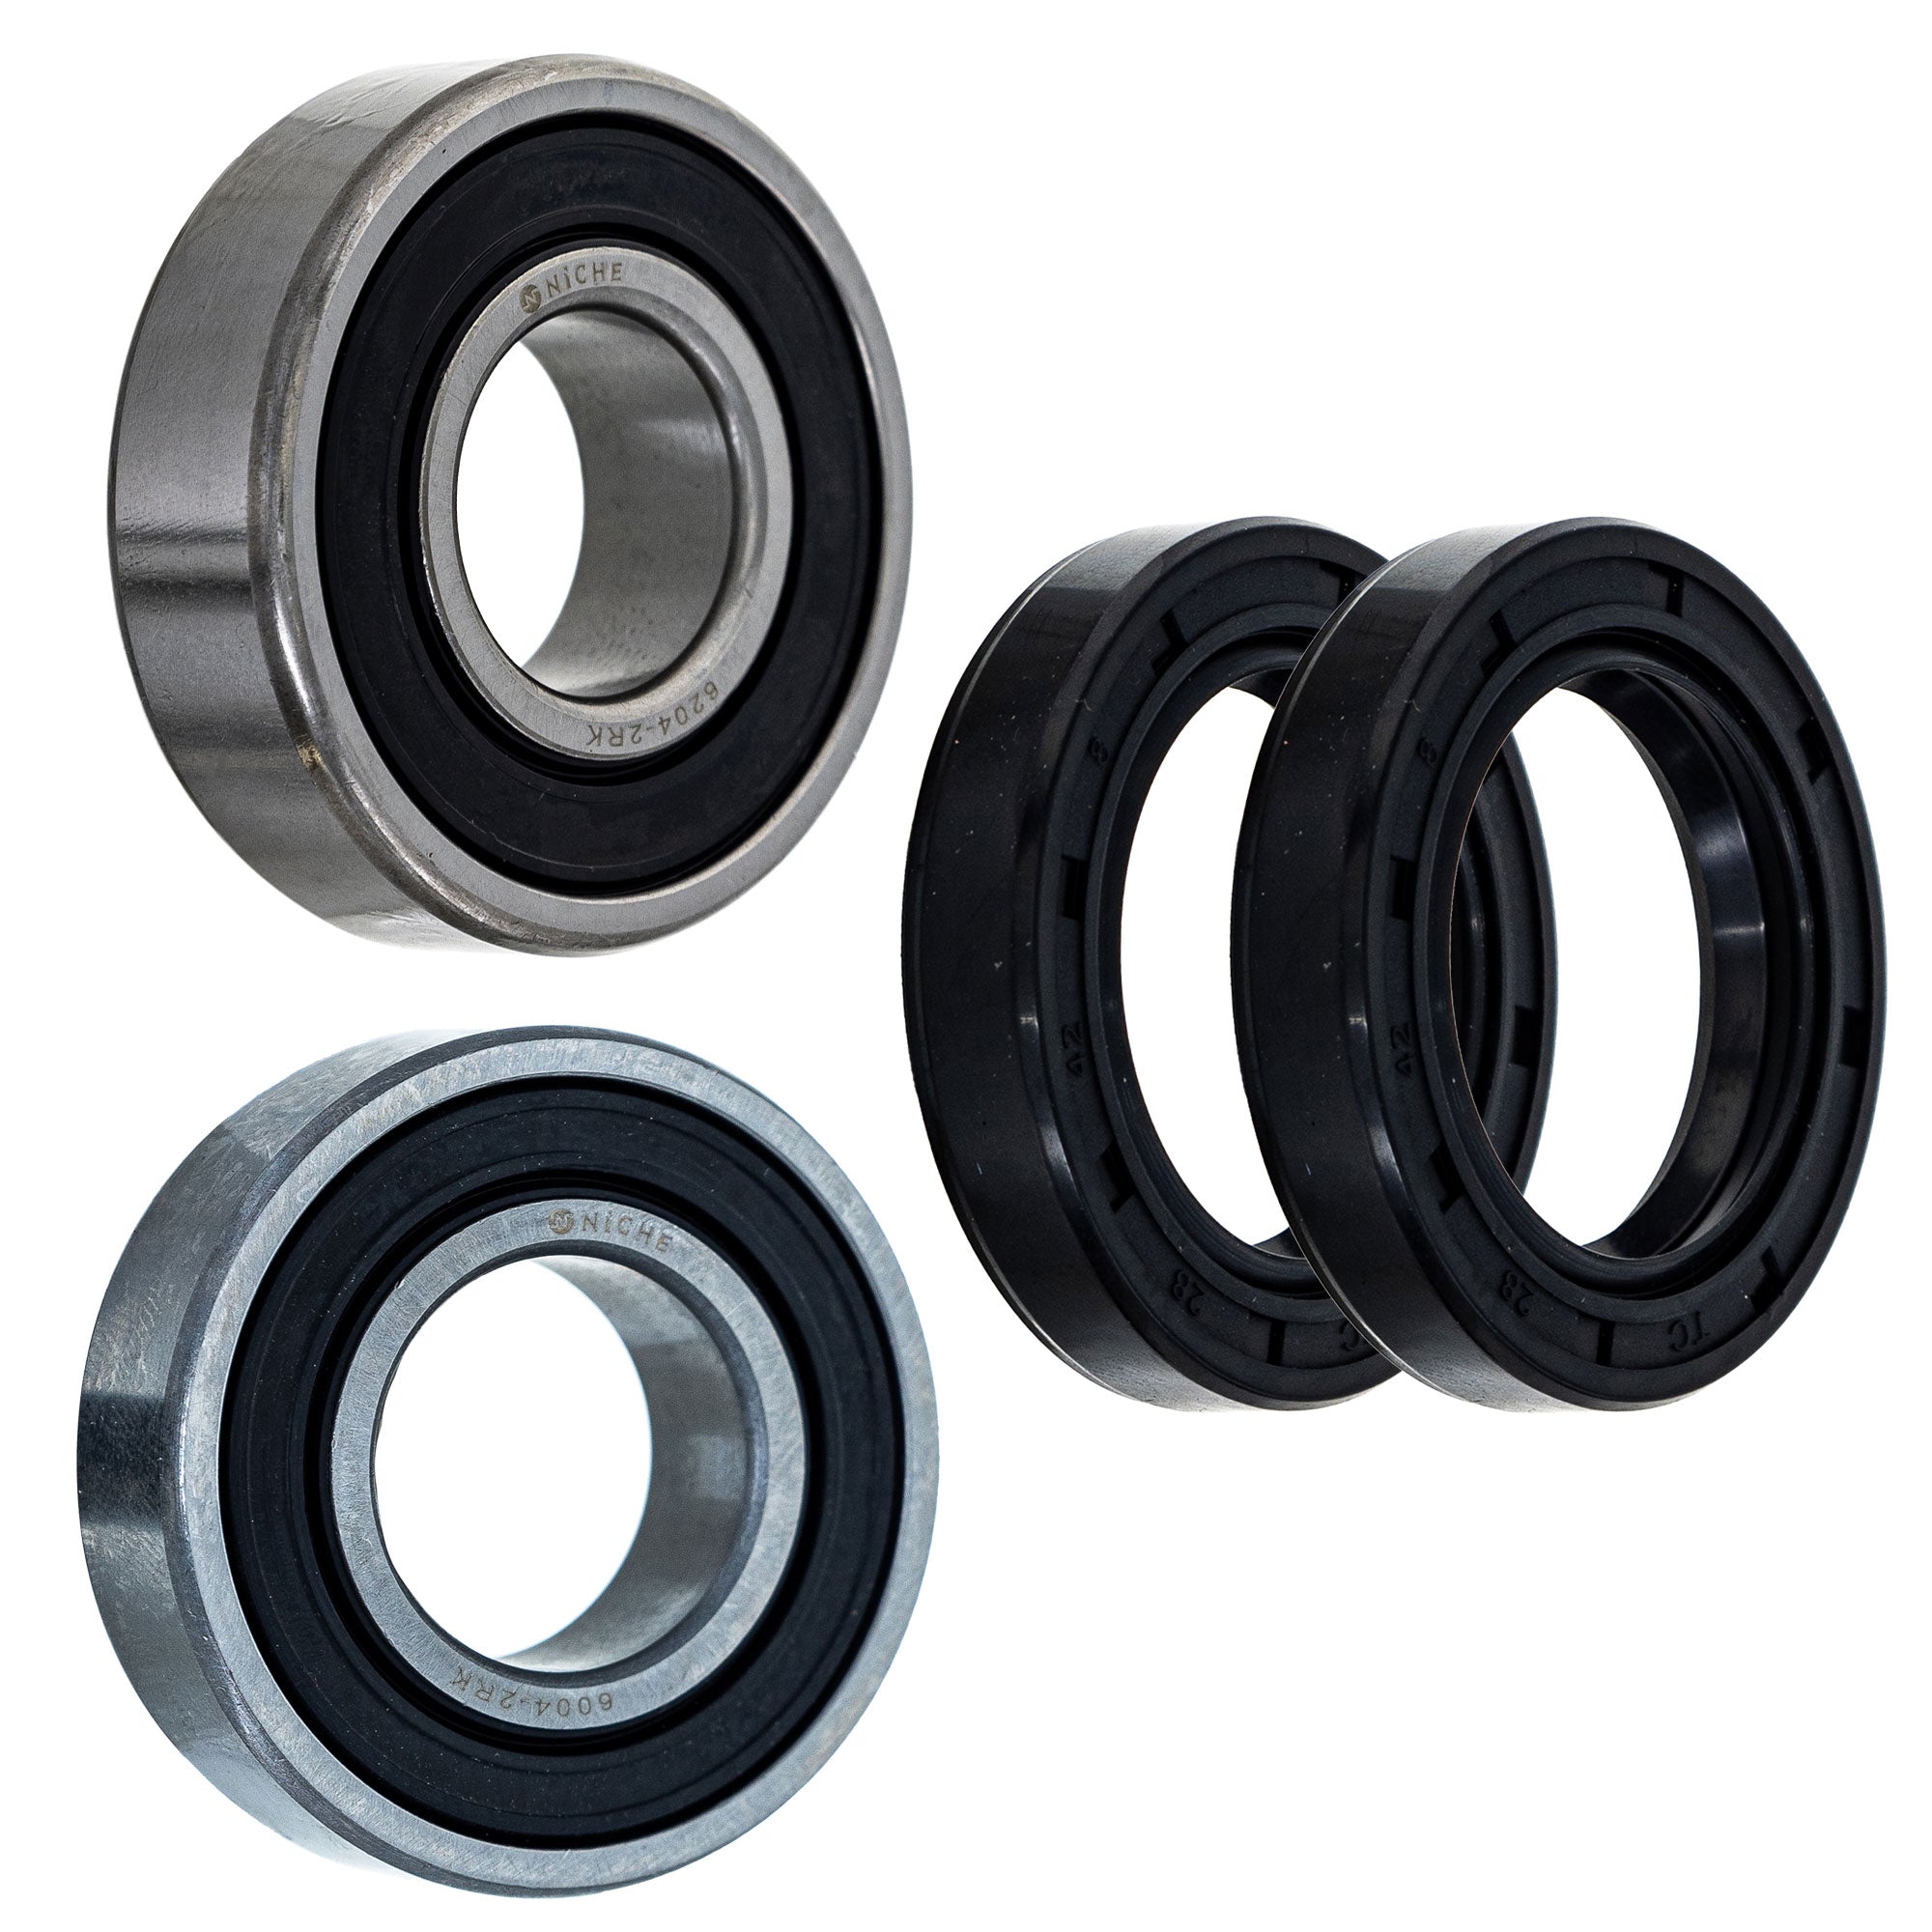 Wheel Bearing Seal Kit for zOTHER CR500R CR250R CR125R NICHE MK1008981